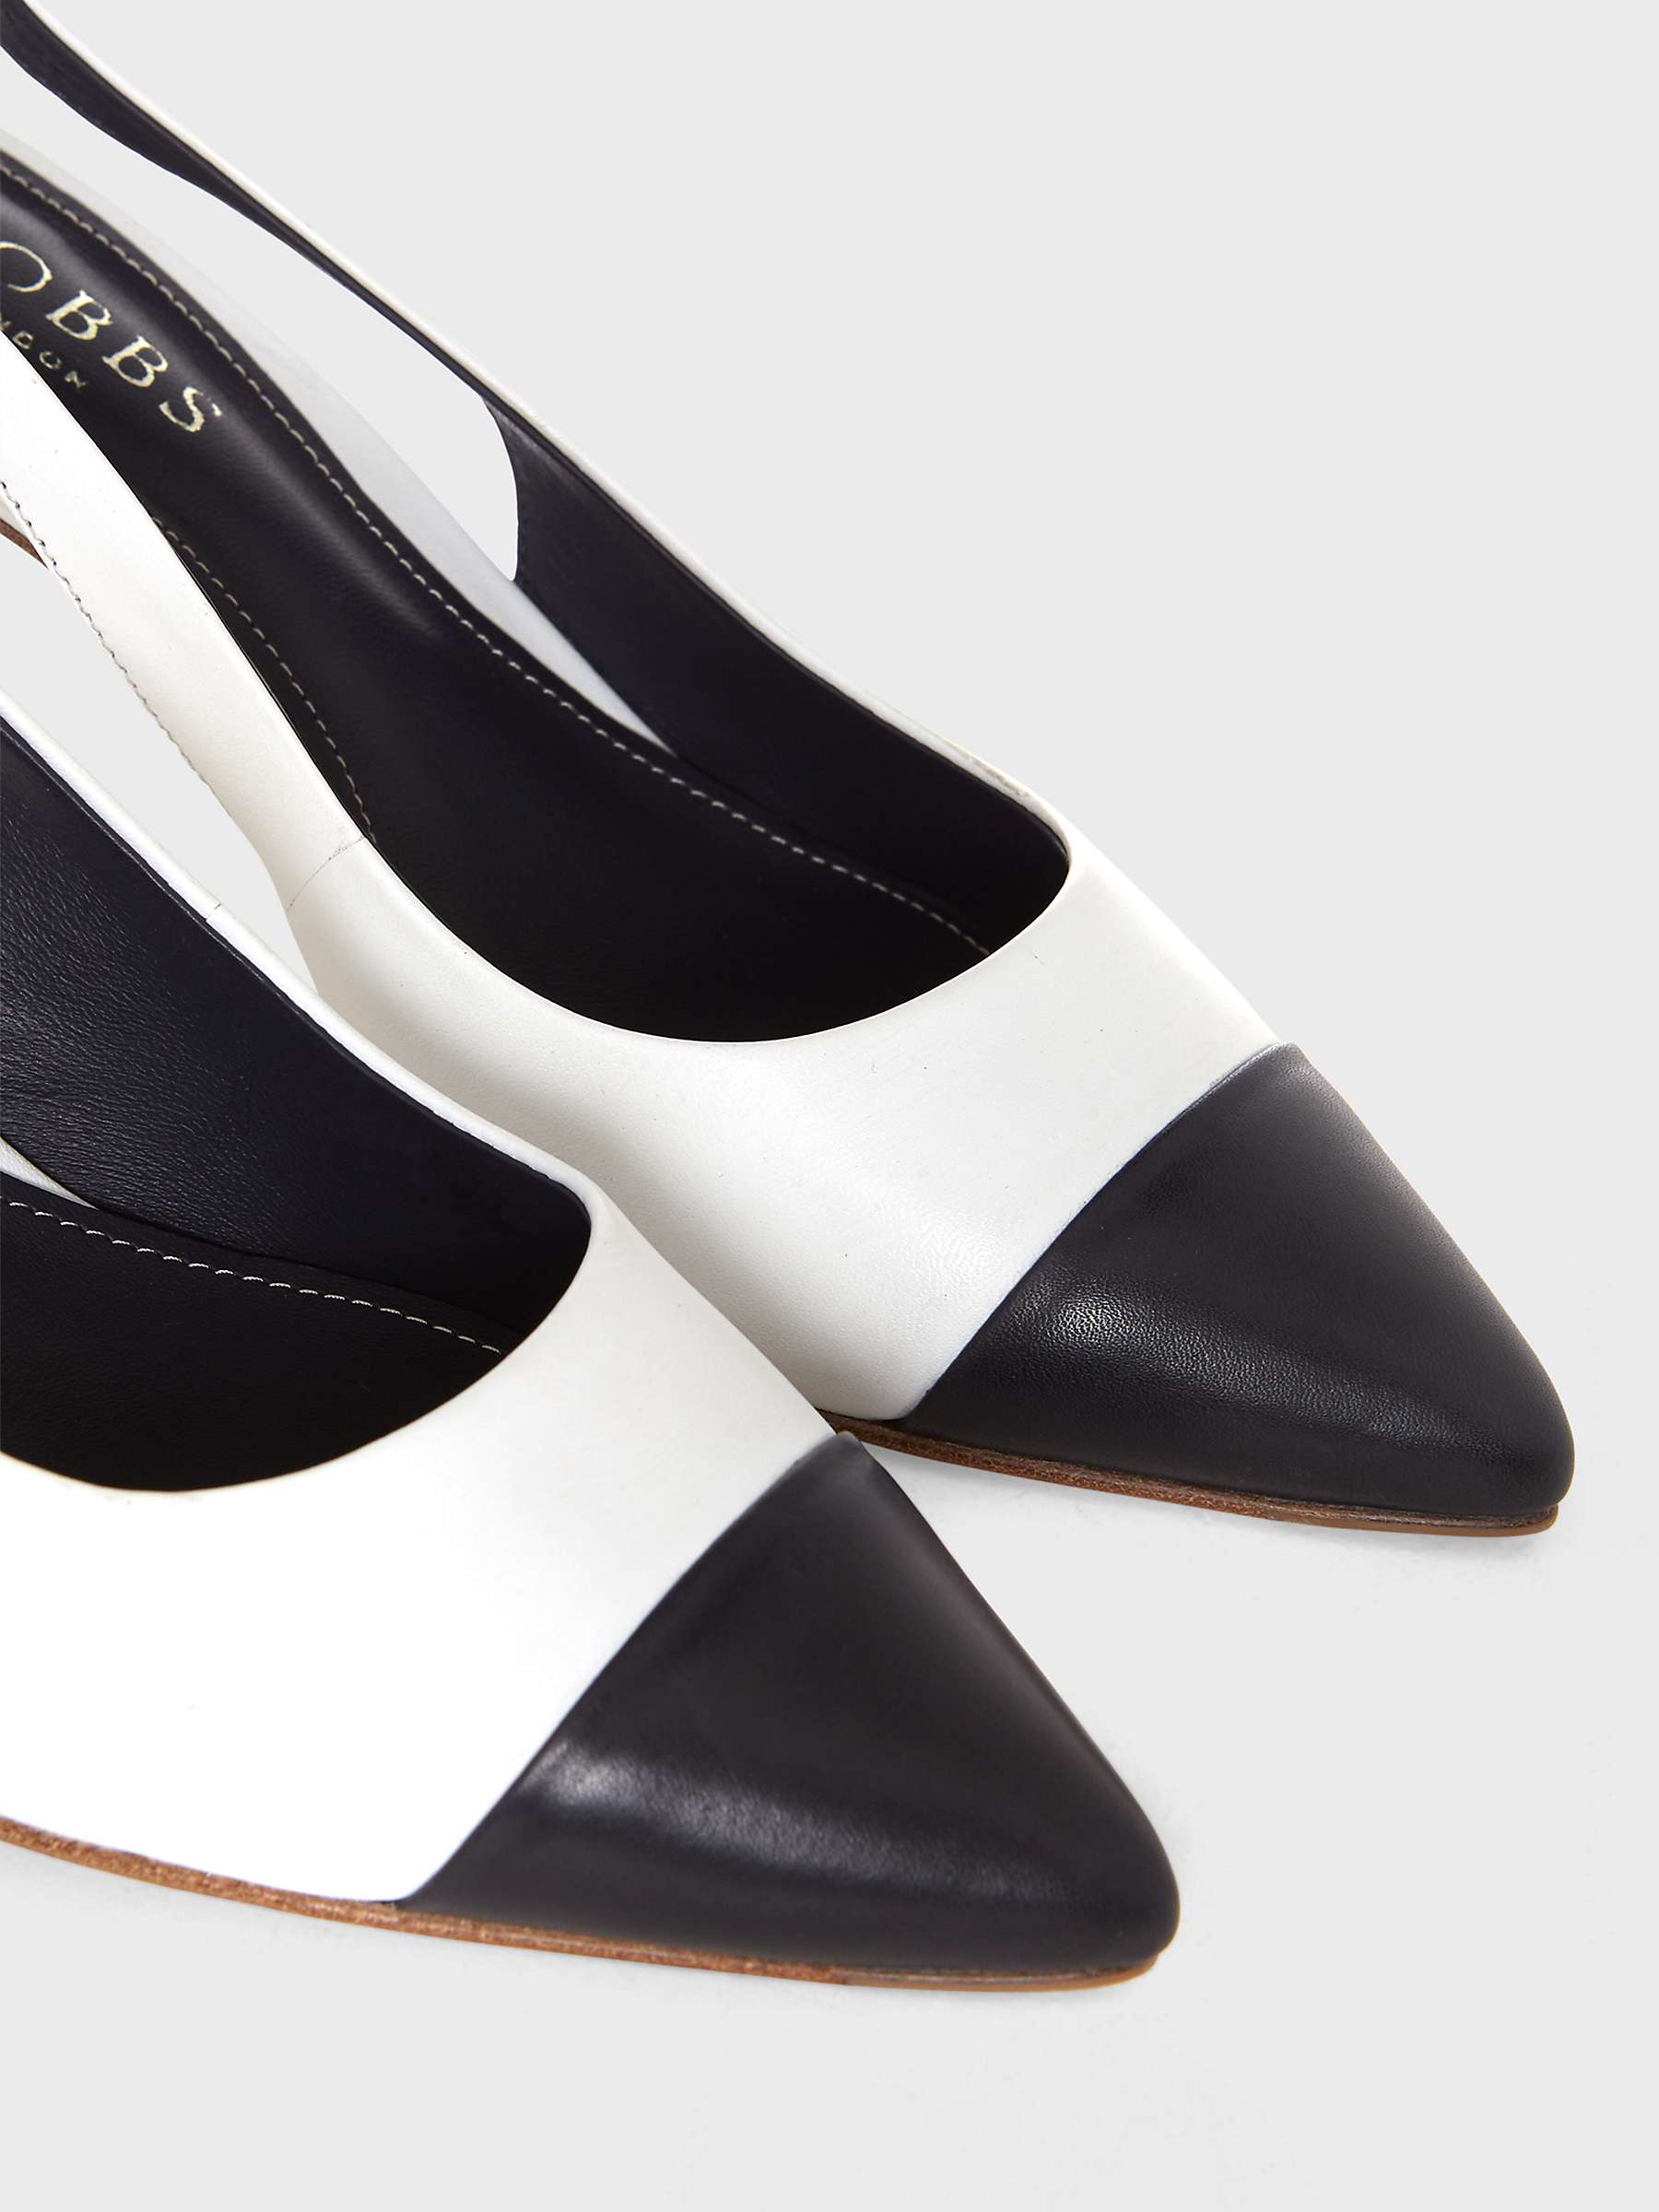 Buy Hobbs Adie Slingback Kitten Heel Court Shoes, White/Black Online at johnlewis.com